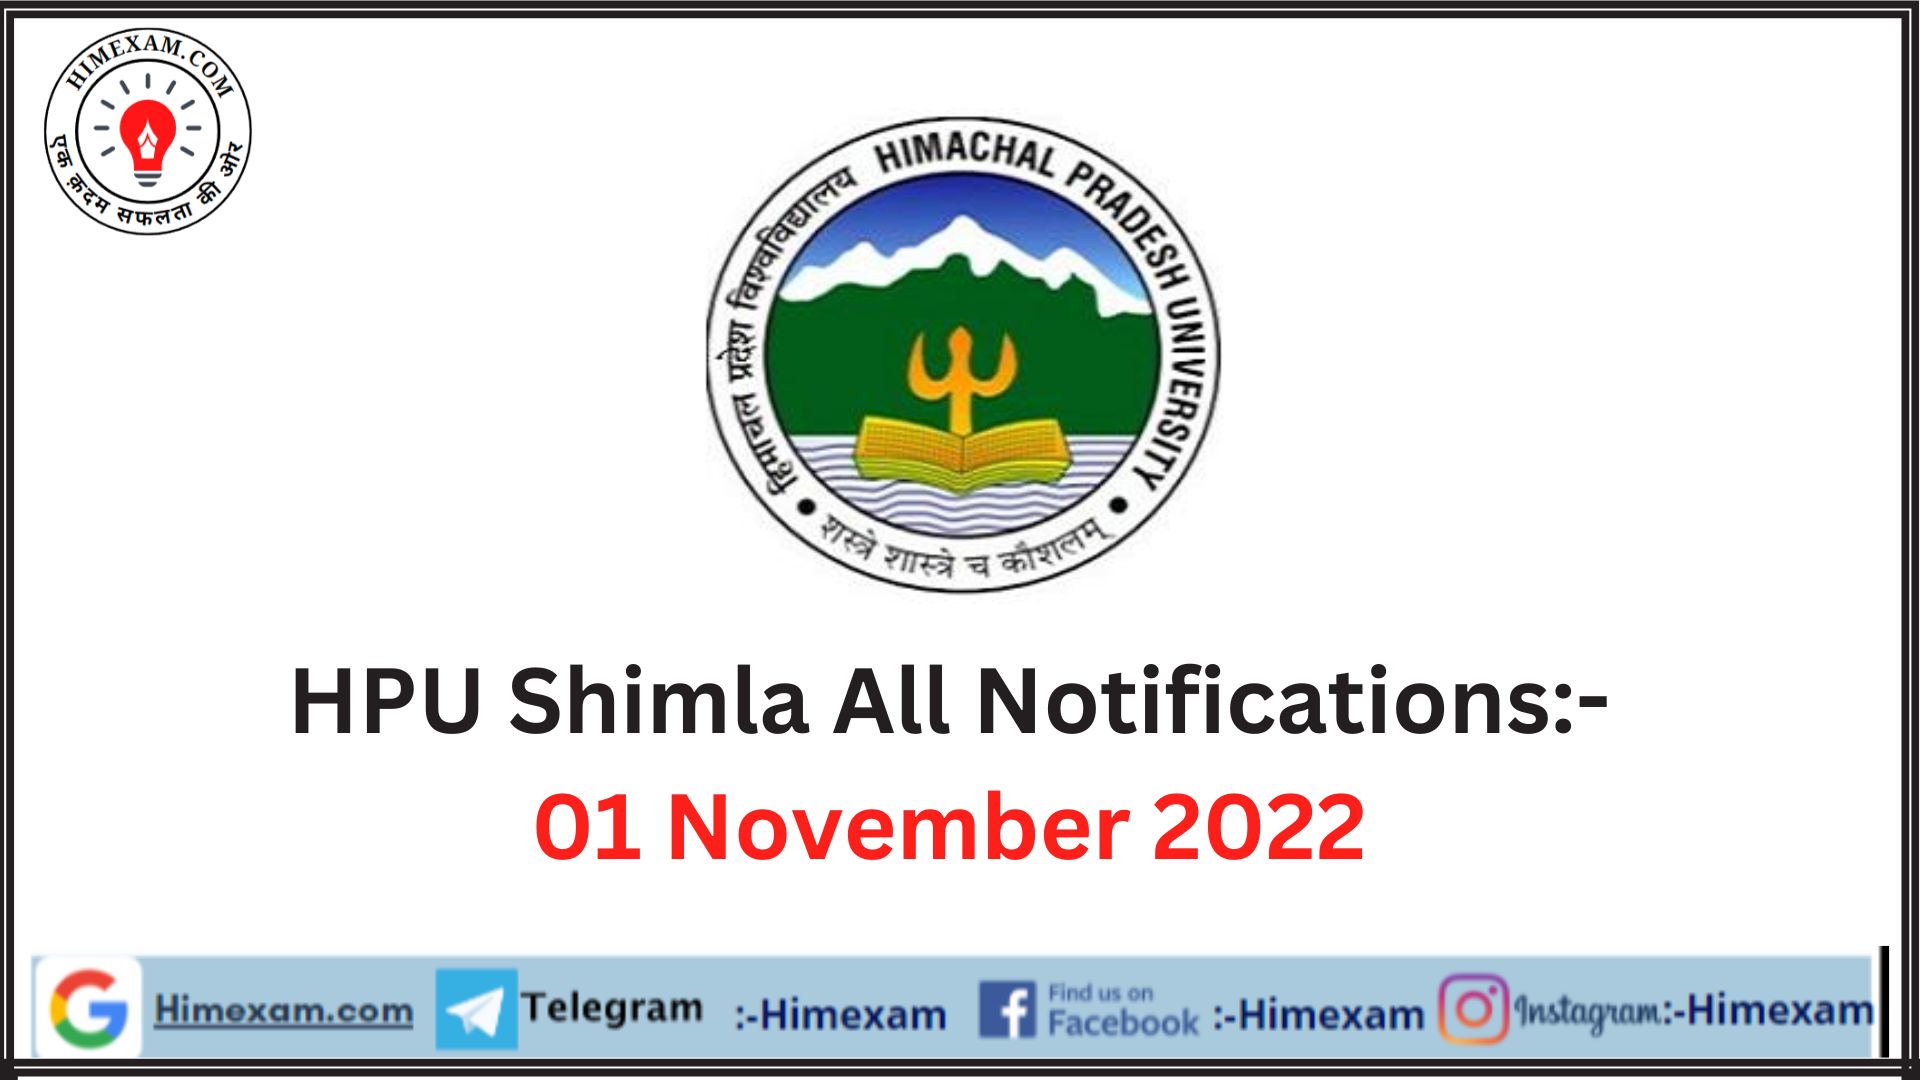 HPU Shimla All Notifications:- 01 November 2022